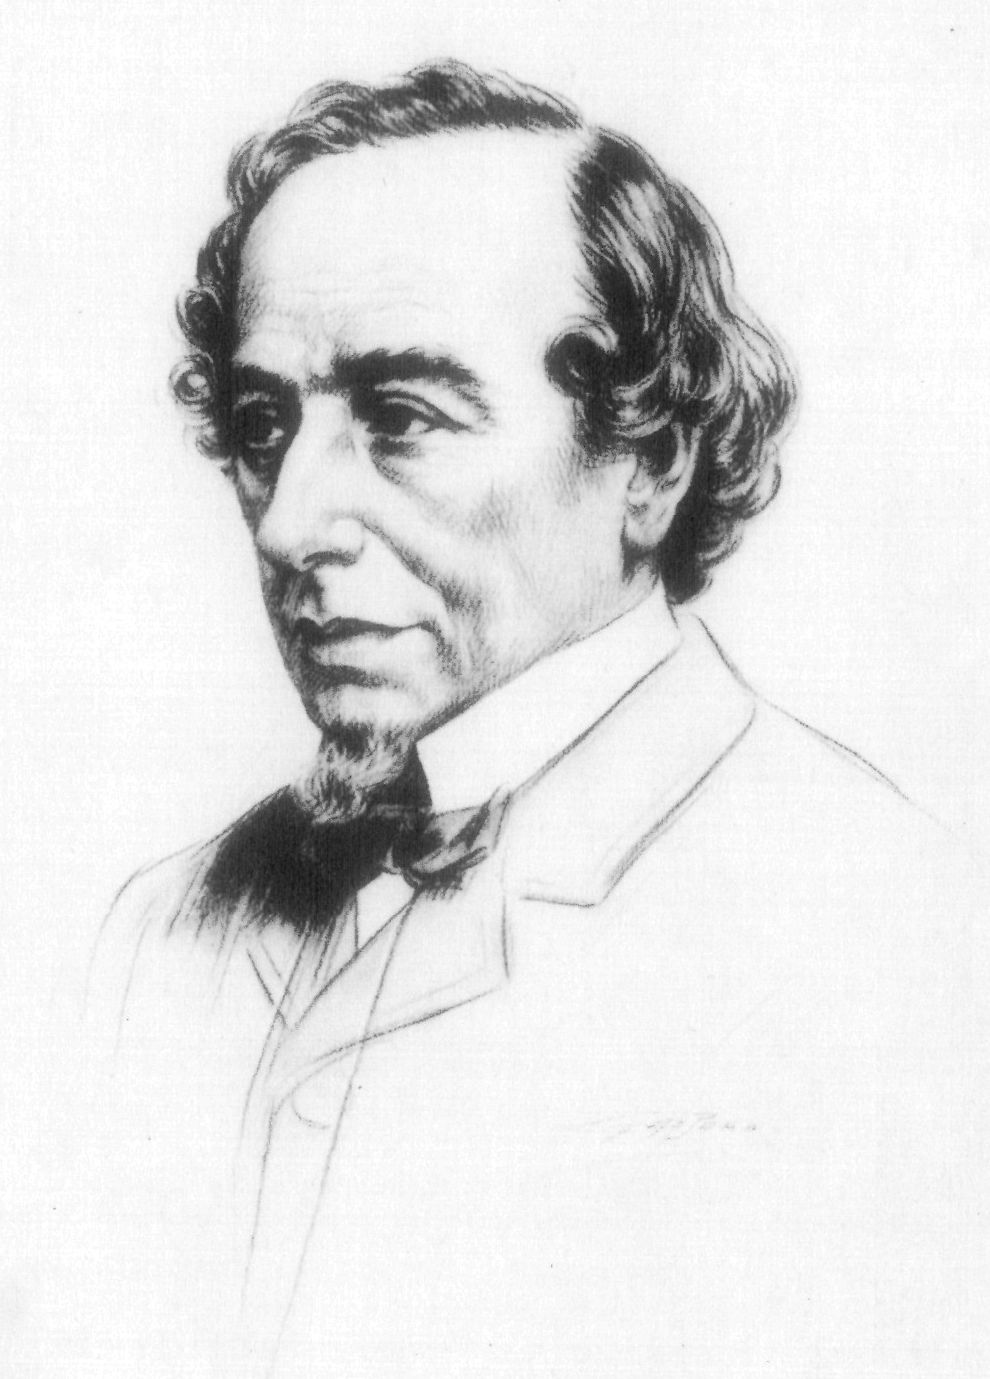 http://upload.wikimedia.org/wikipedia/commons/8/86/Benjamin_Disraeli,_1st_Earl_of_Beaconsfield_-_Project_Gutenberg_eText_13619.jpg